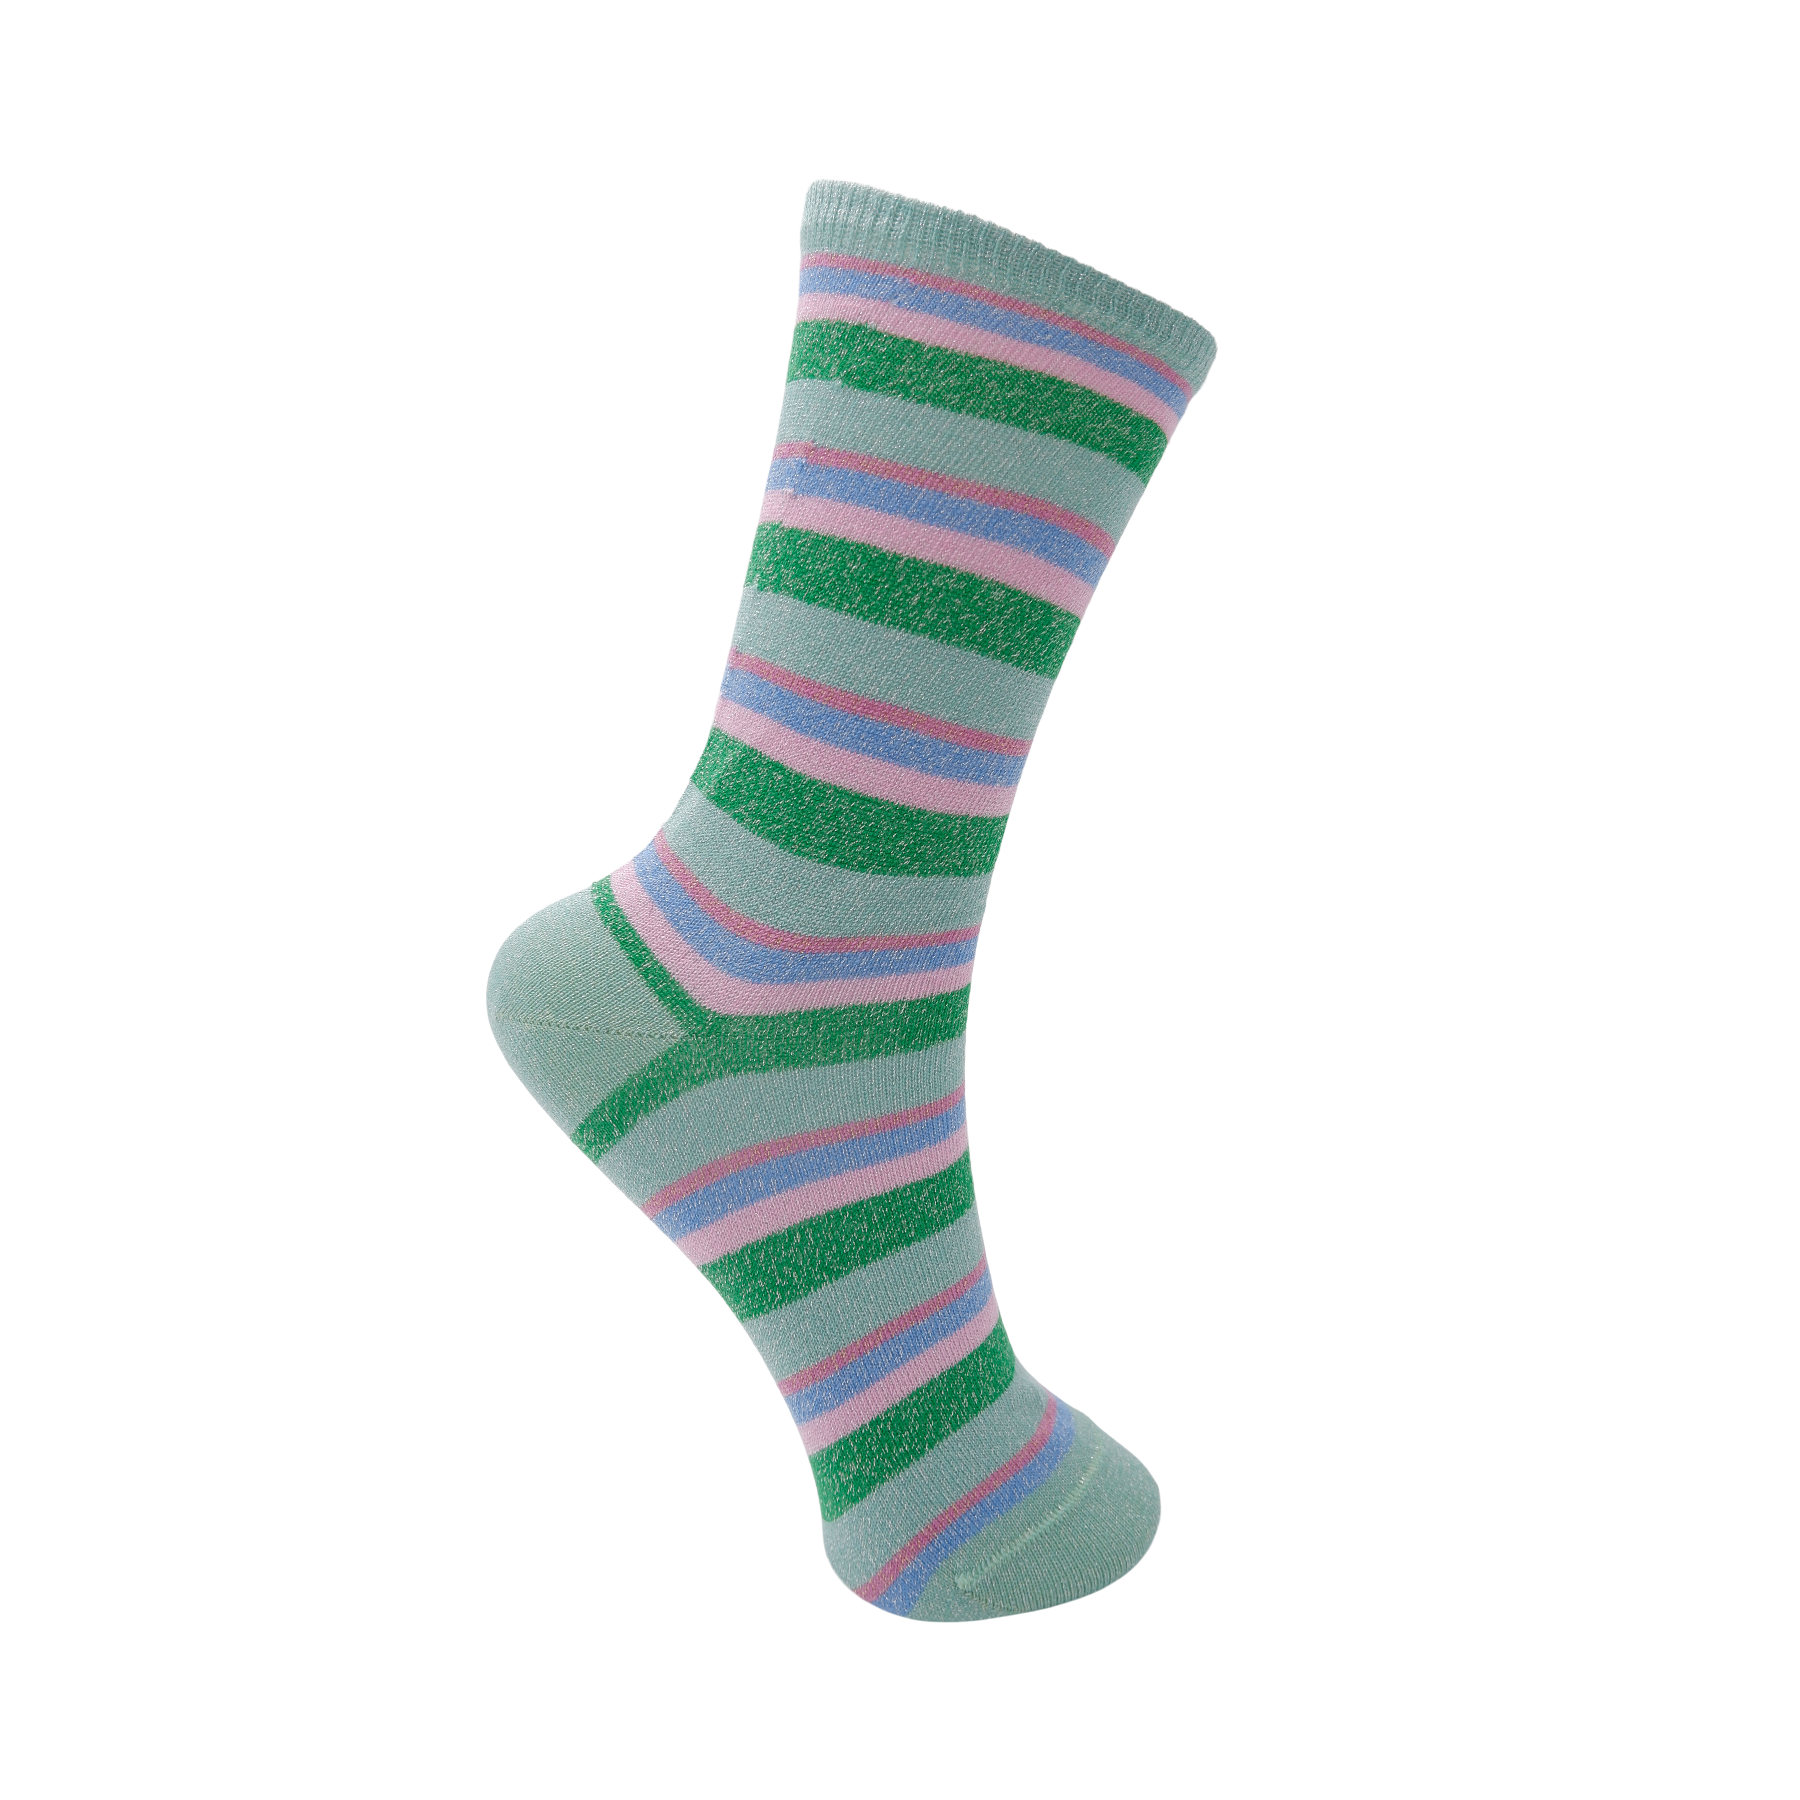 Mint Striped Socks by Black Colour